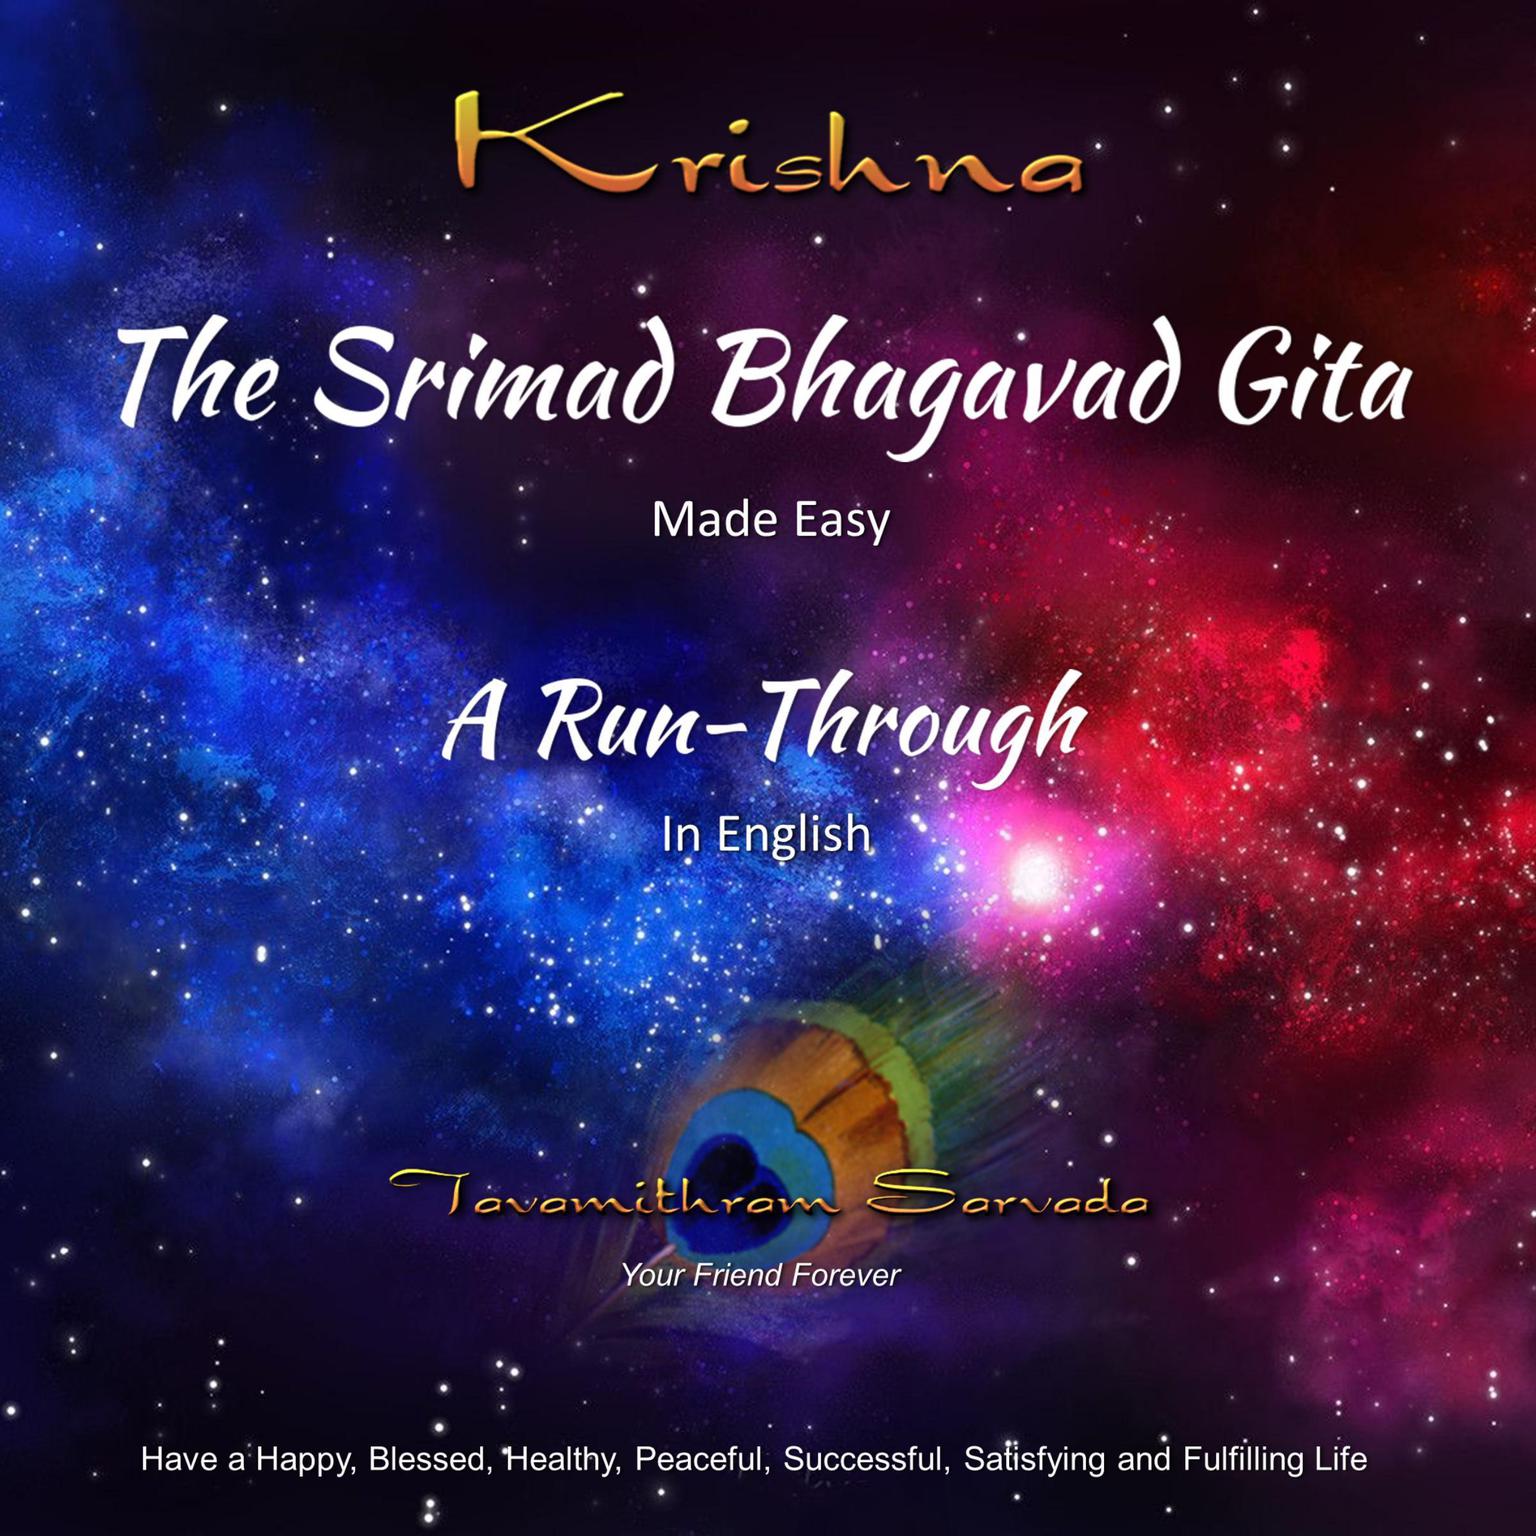 The SRIMAD BHAGAVAD GITA - MADE EASY - A RUN-THROUGH in English Audiobook, by Tavamithram Sarvada